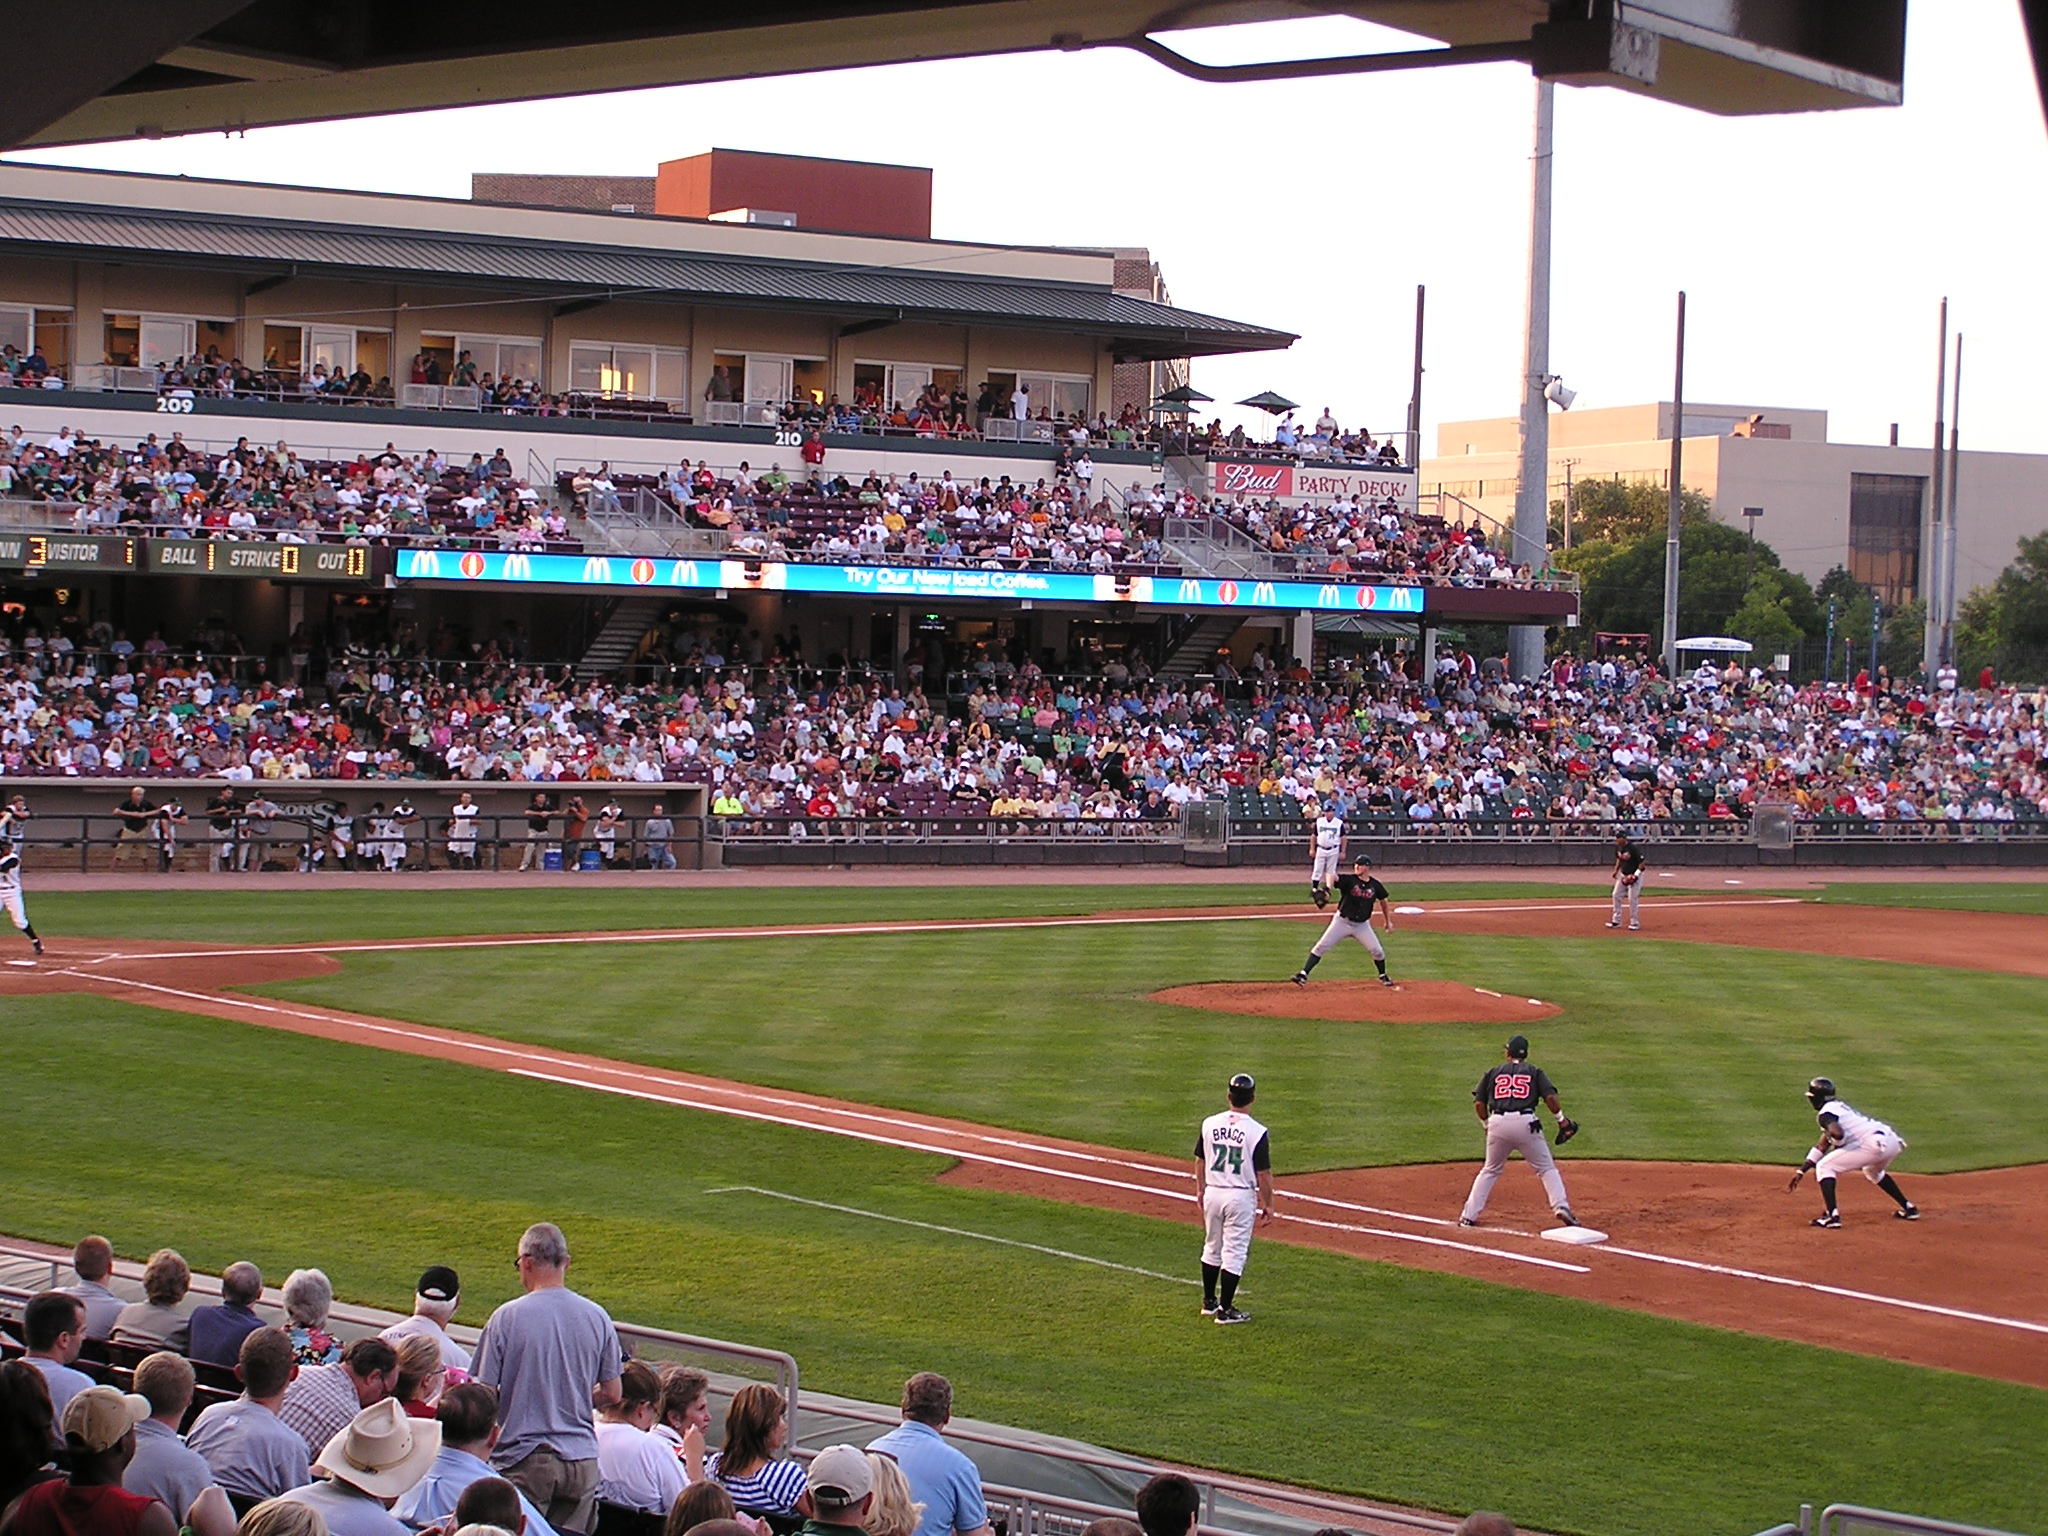 The pitch - Dayton, Ohio